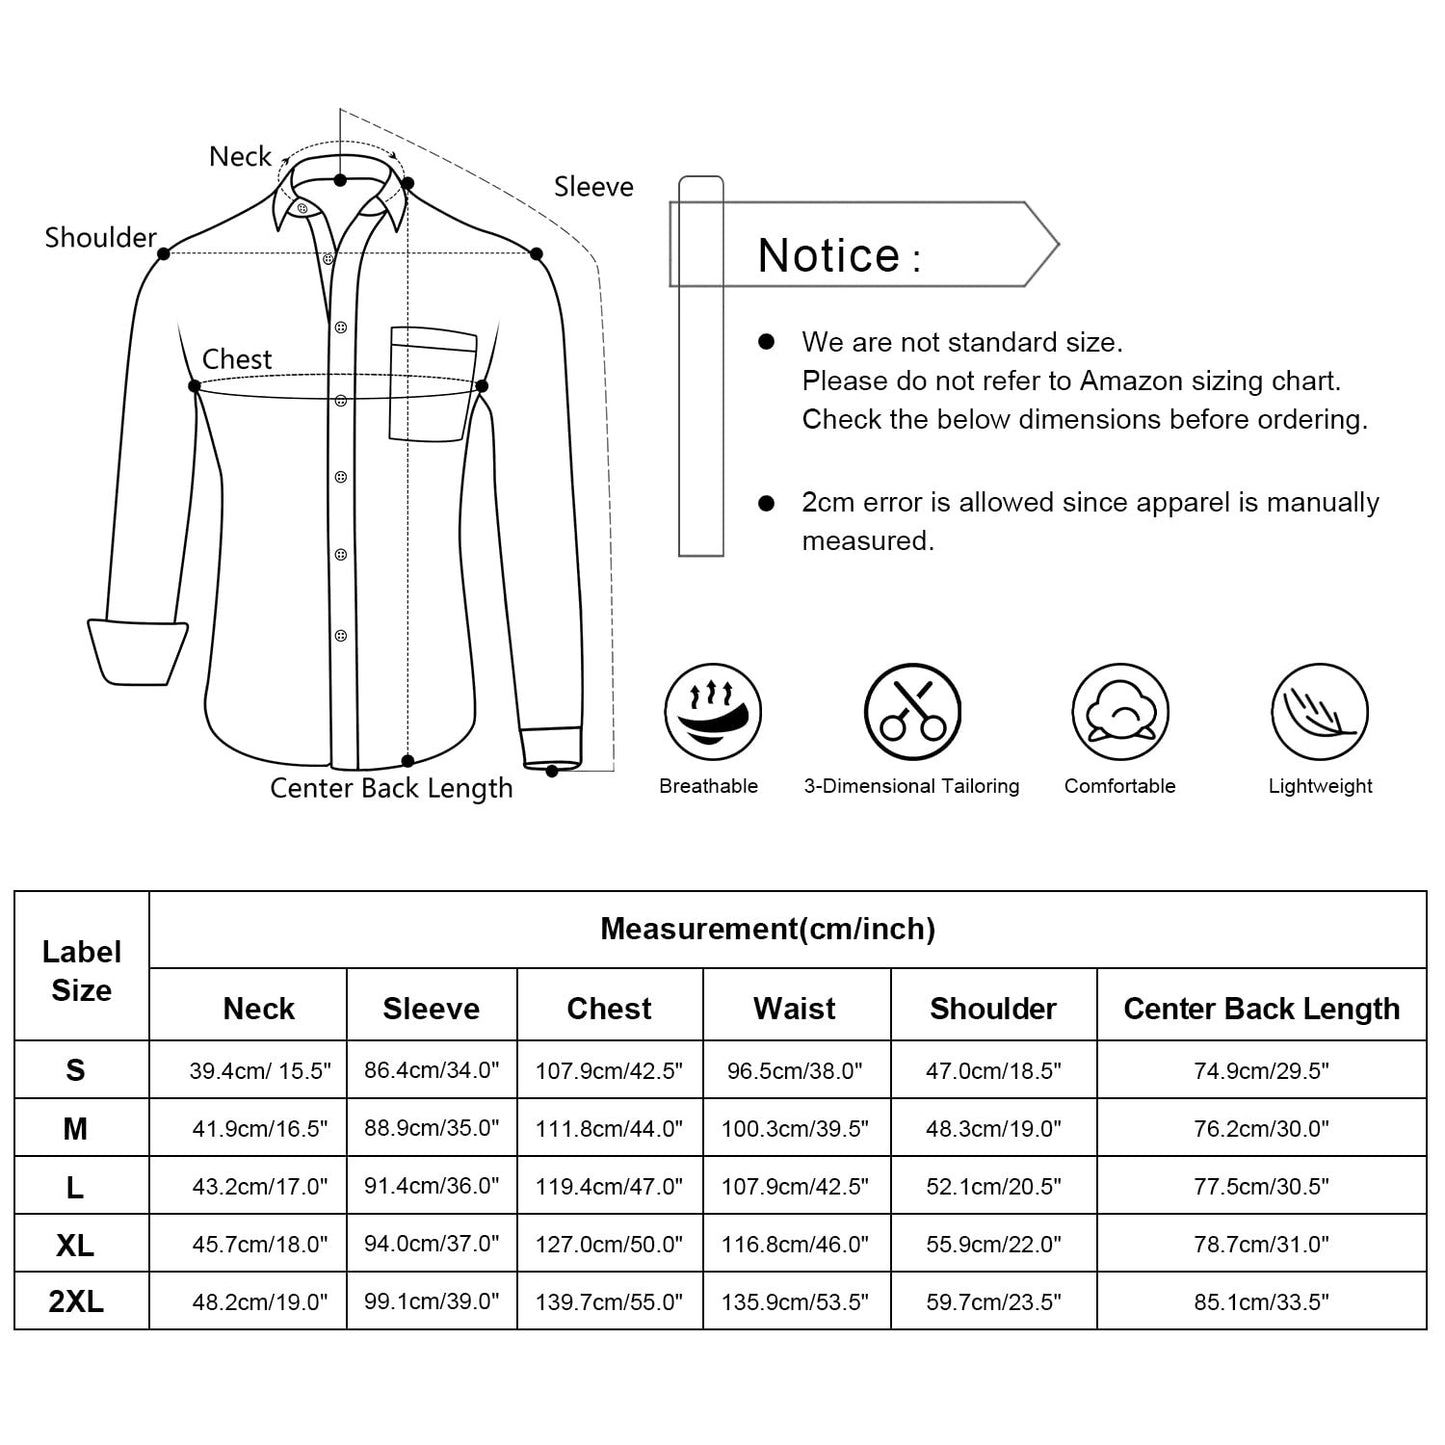 Men's Lapel Bronzing Shirt Casual Slim Fit Shiny Pattern Button-Down Long Sleeve Shirt, 009-Snake